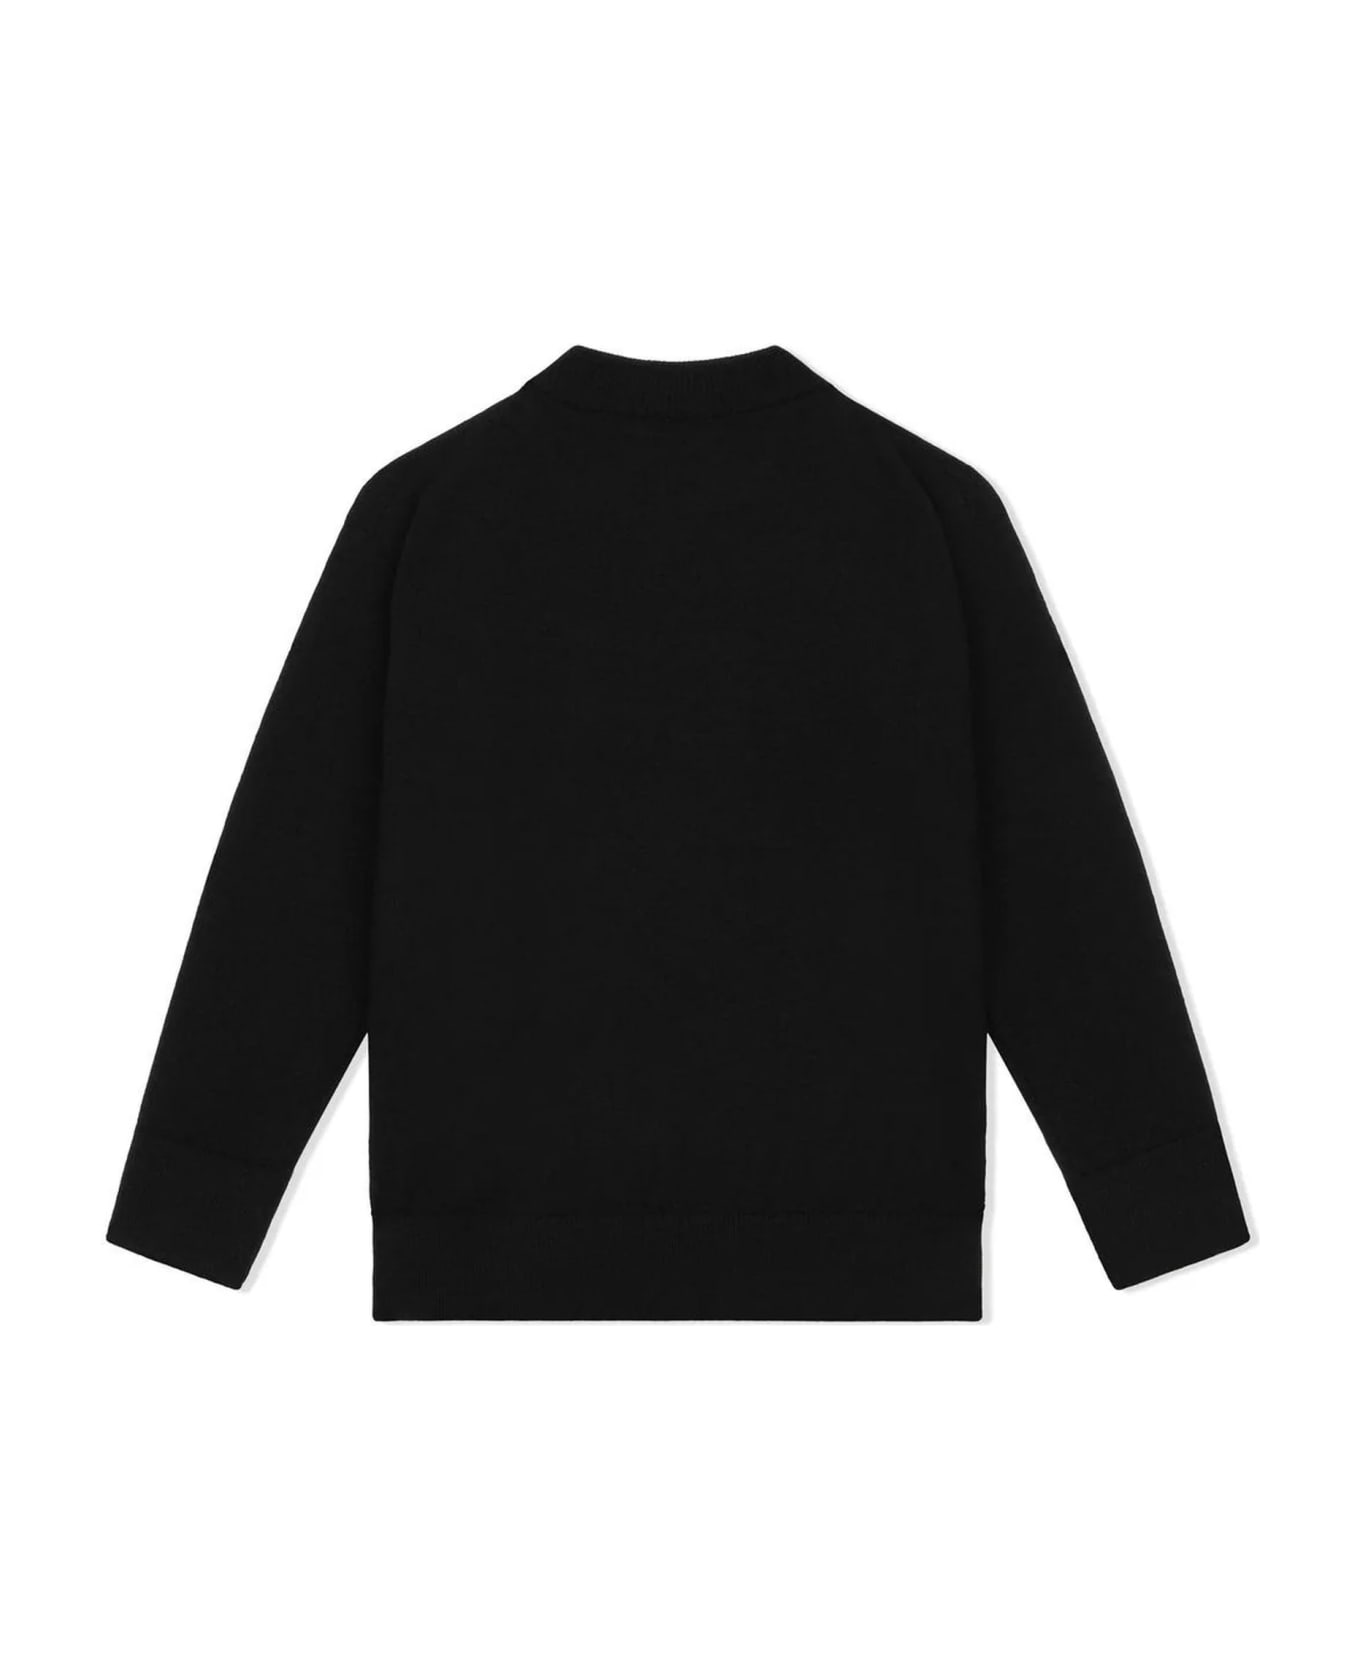 Dolce & Gabbana Black Wool Jumper - Variante ニットウェア＆スウェットシャツ